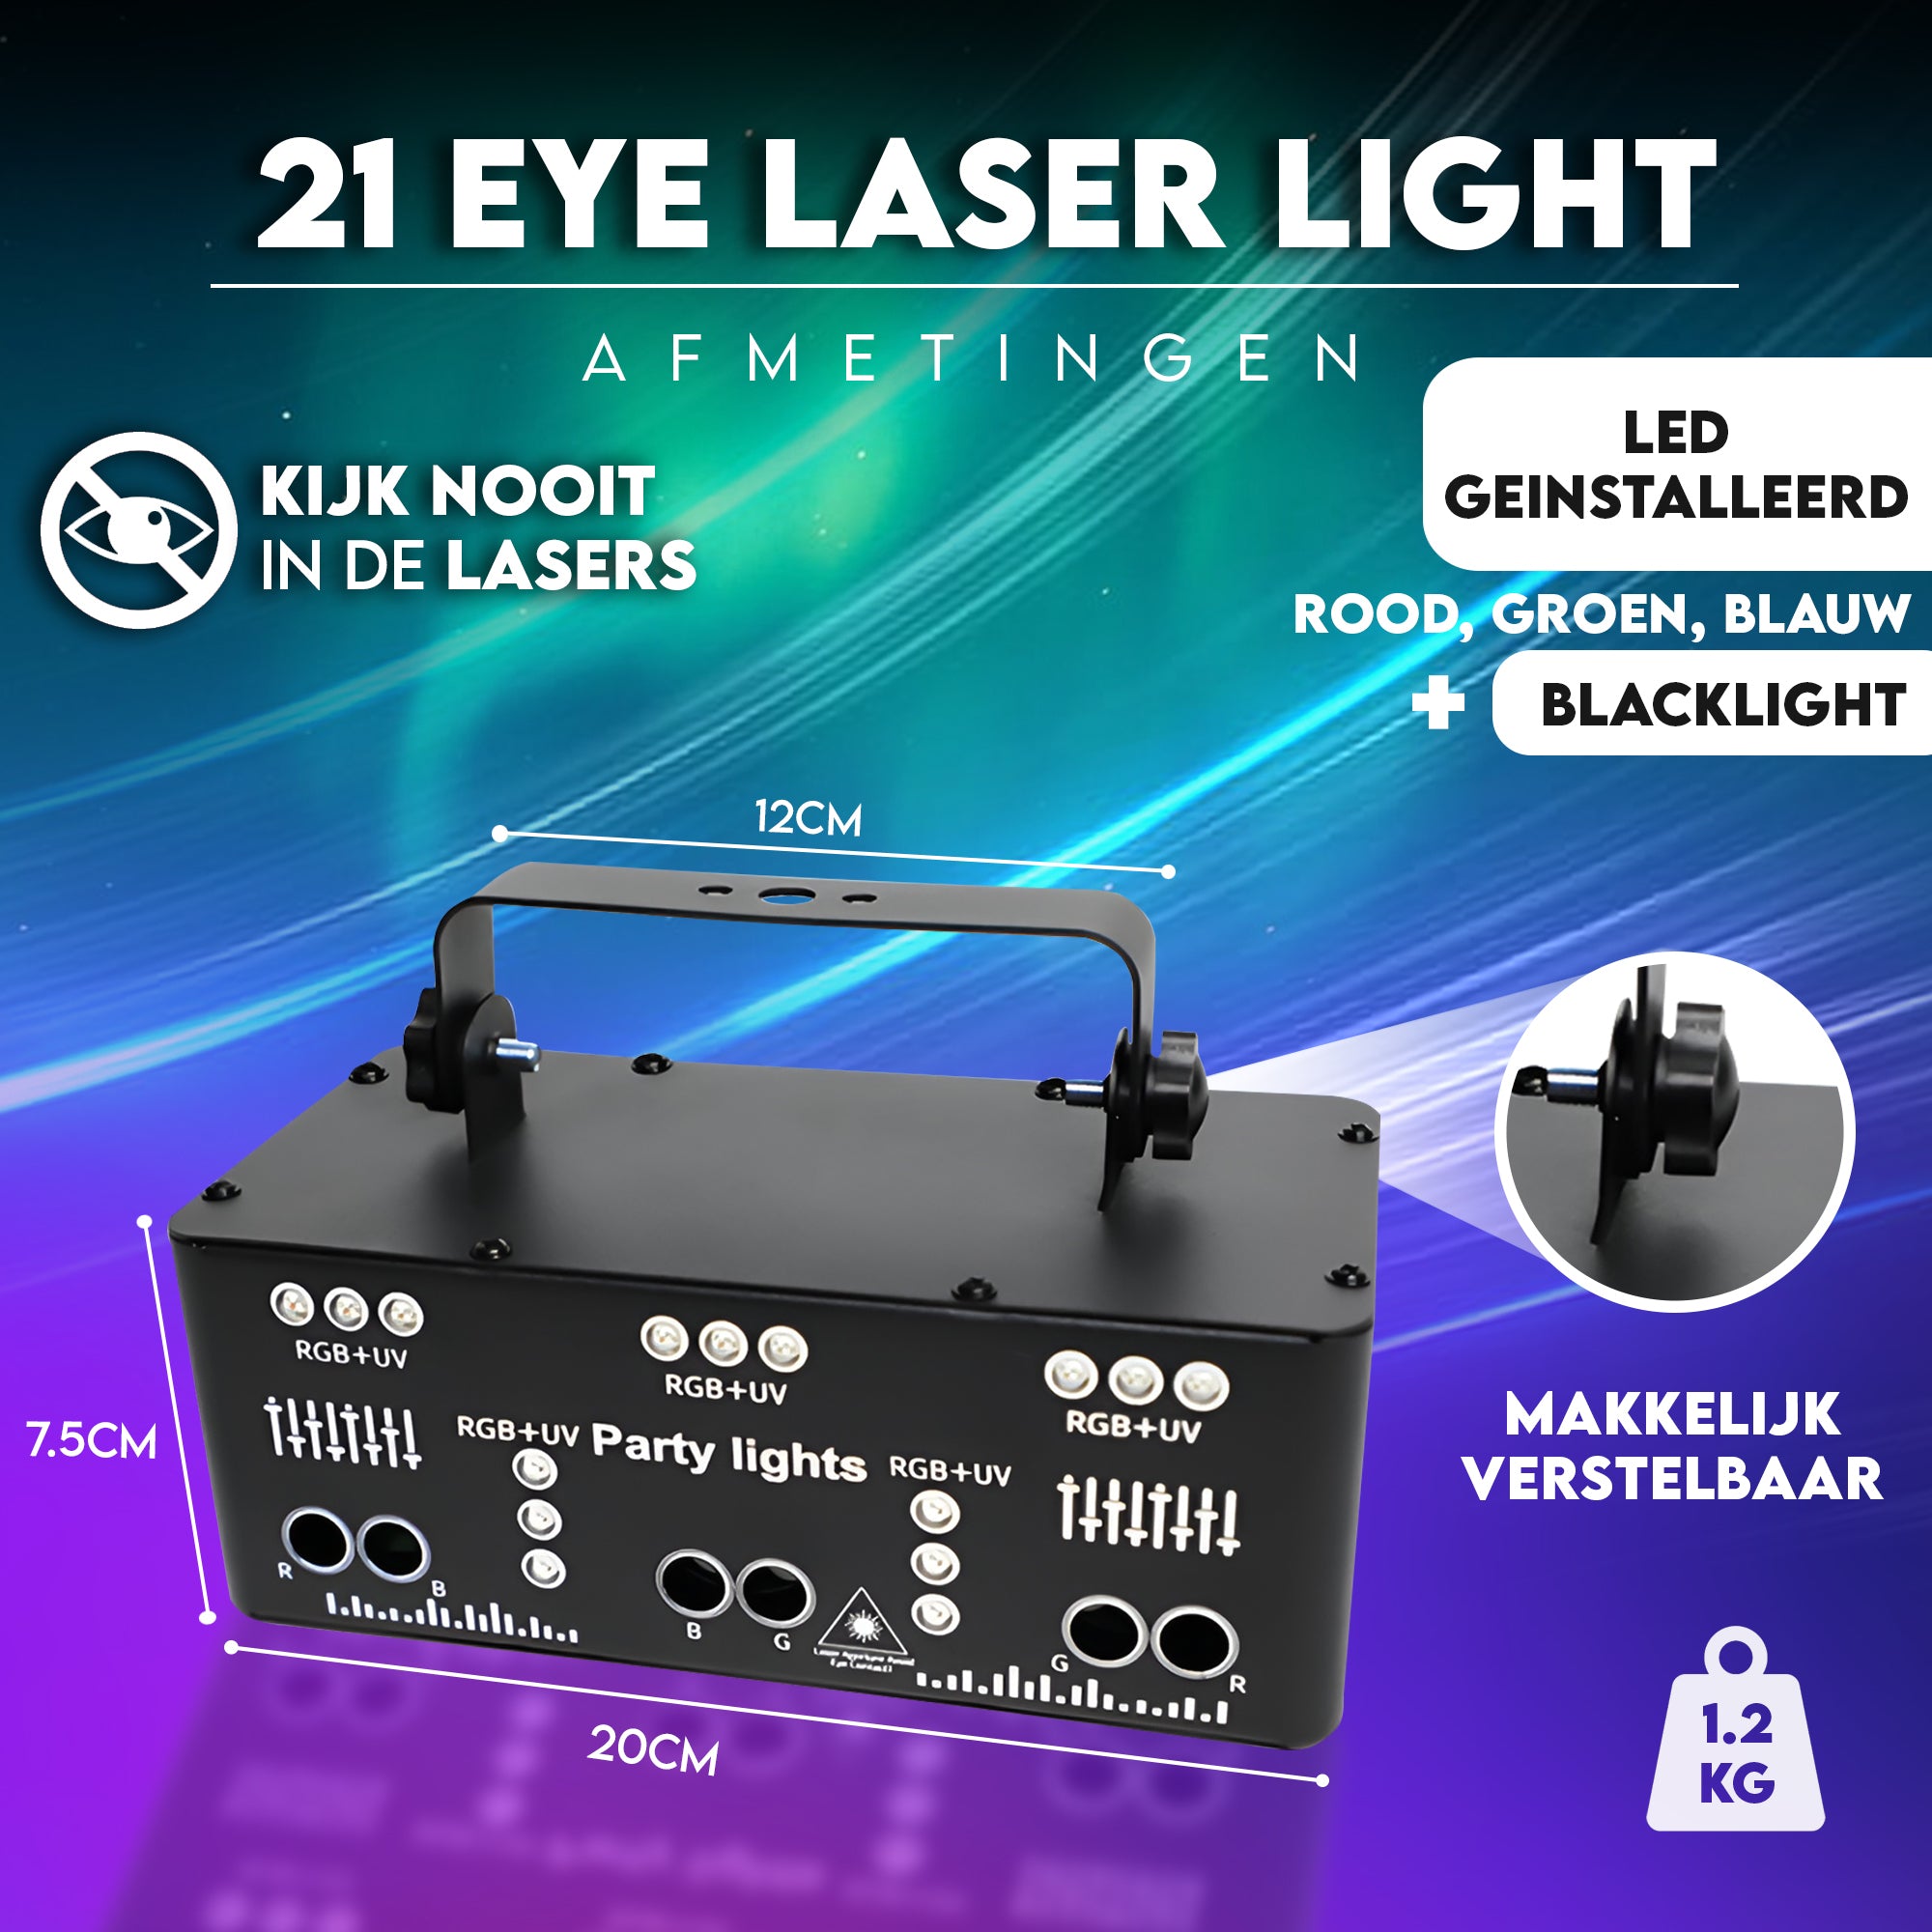 21 eye laser light - laser - Blacklight - Stroboscoop - Discolamp - DJ lamp - Feestverlichting - Disco - DMX - Discobal - Discolamp kinderen - Discobol - lasers